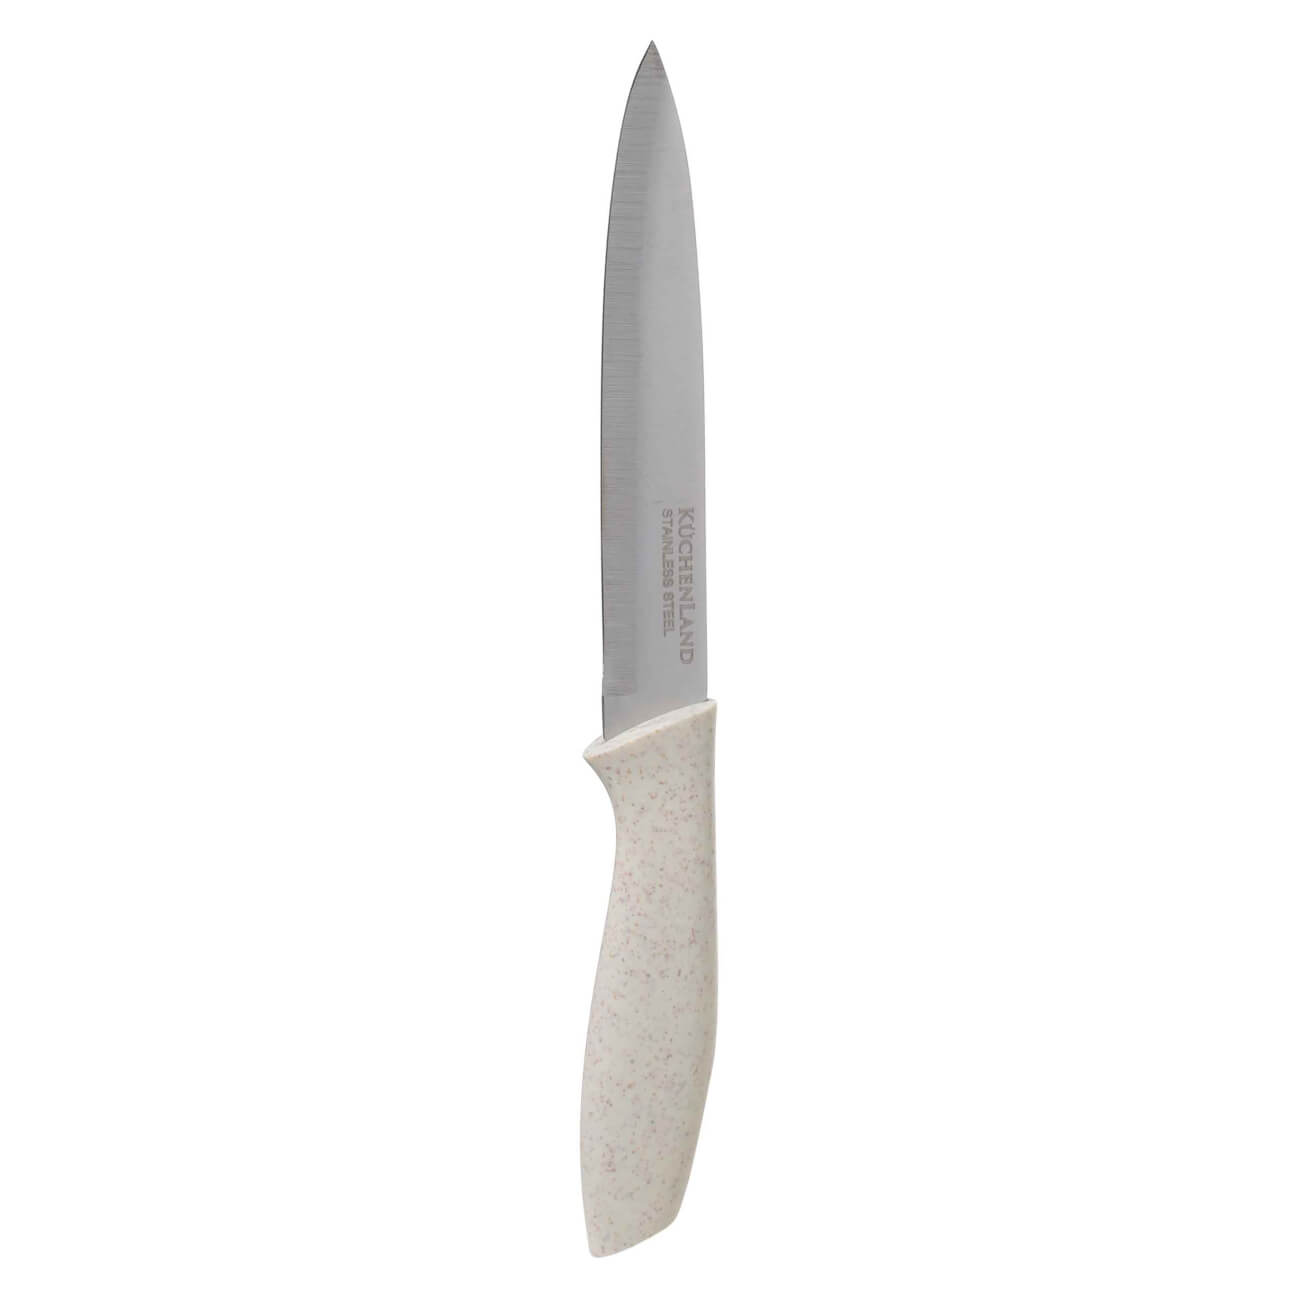 Нож для нарезки, 13 см, сталь/пластик, молочный, Speck-light нож поварской 20 см сталь пластик молочный speck light